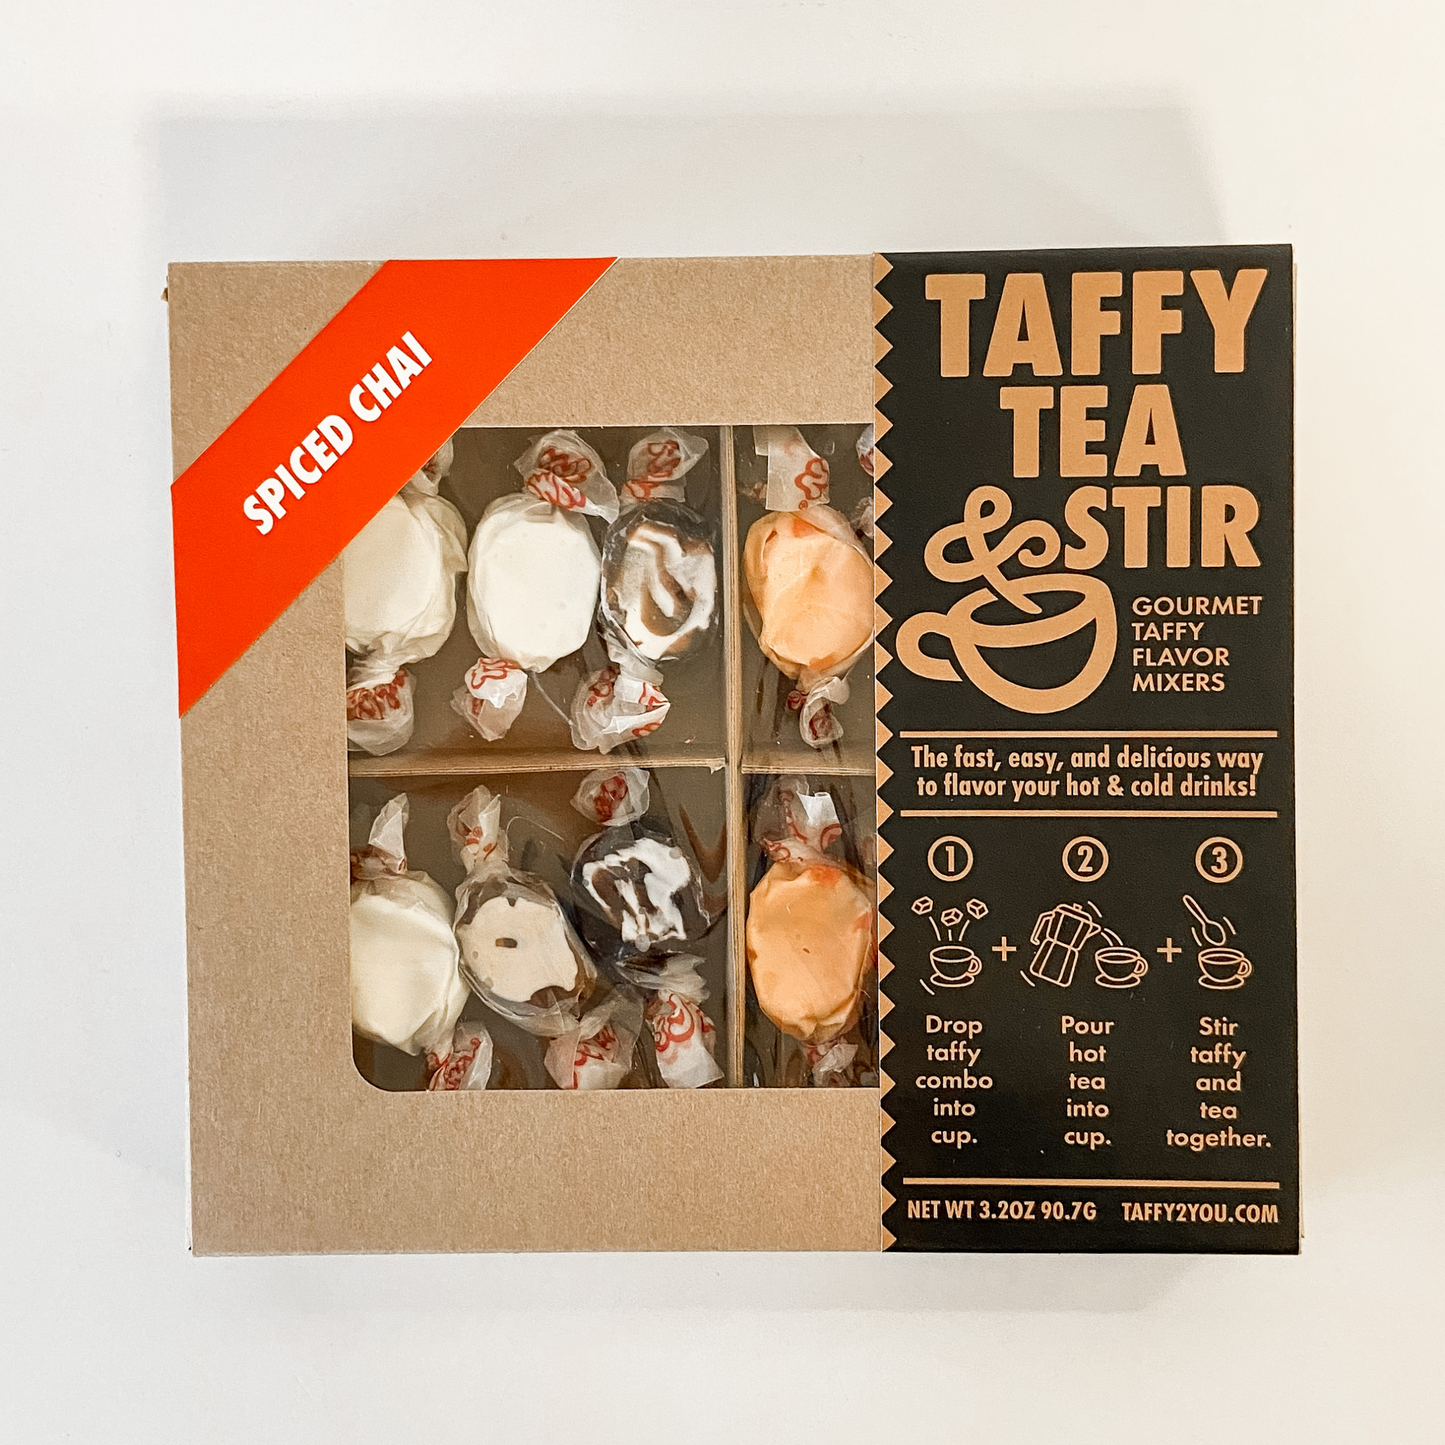 Taffy, Tea, & Stir - Tea Flavors Maker